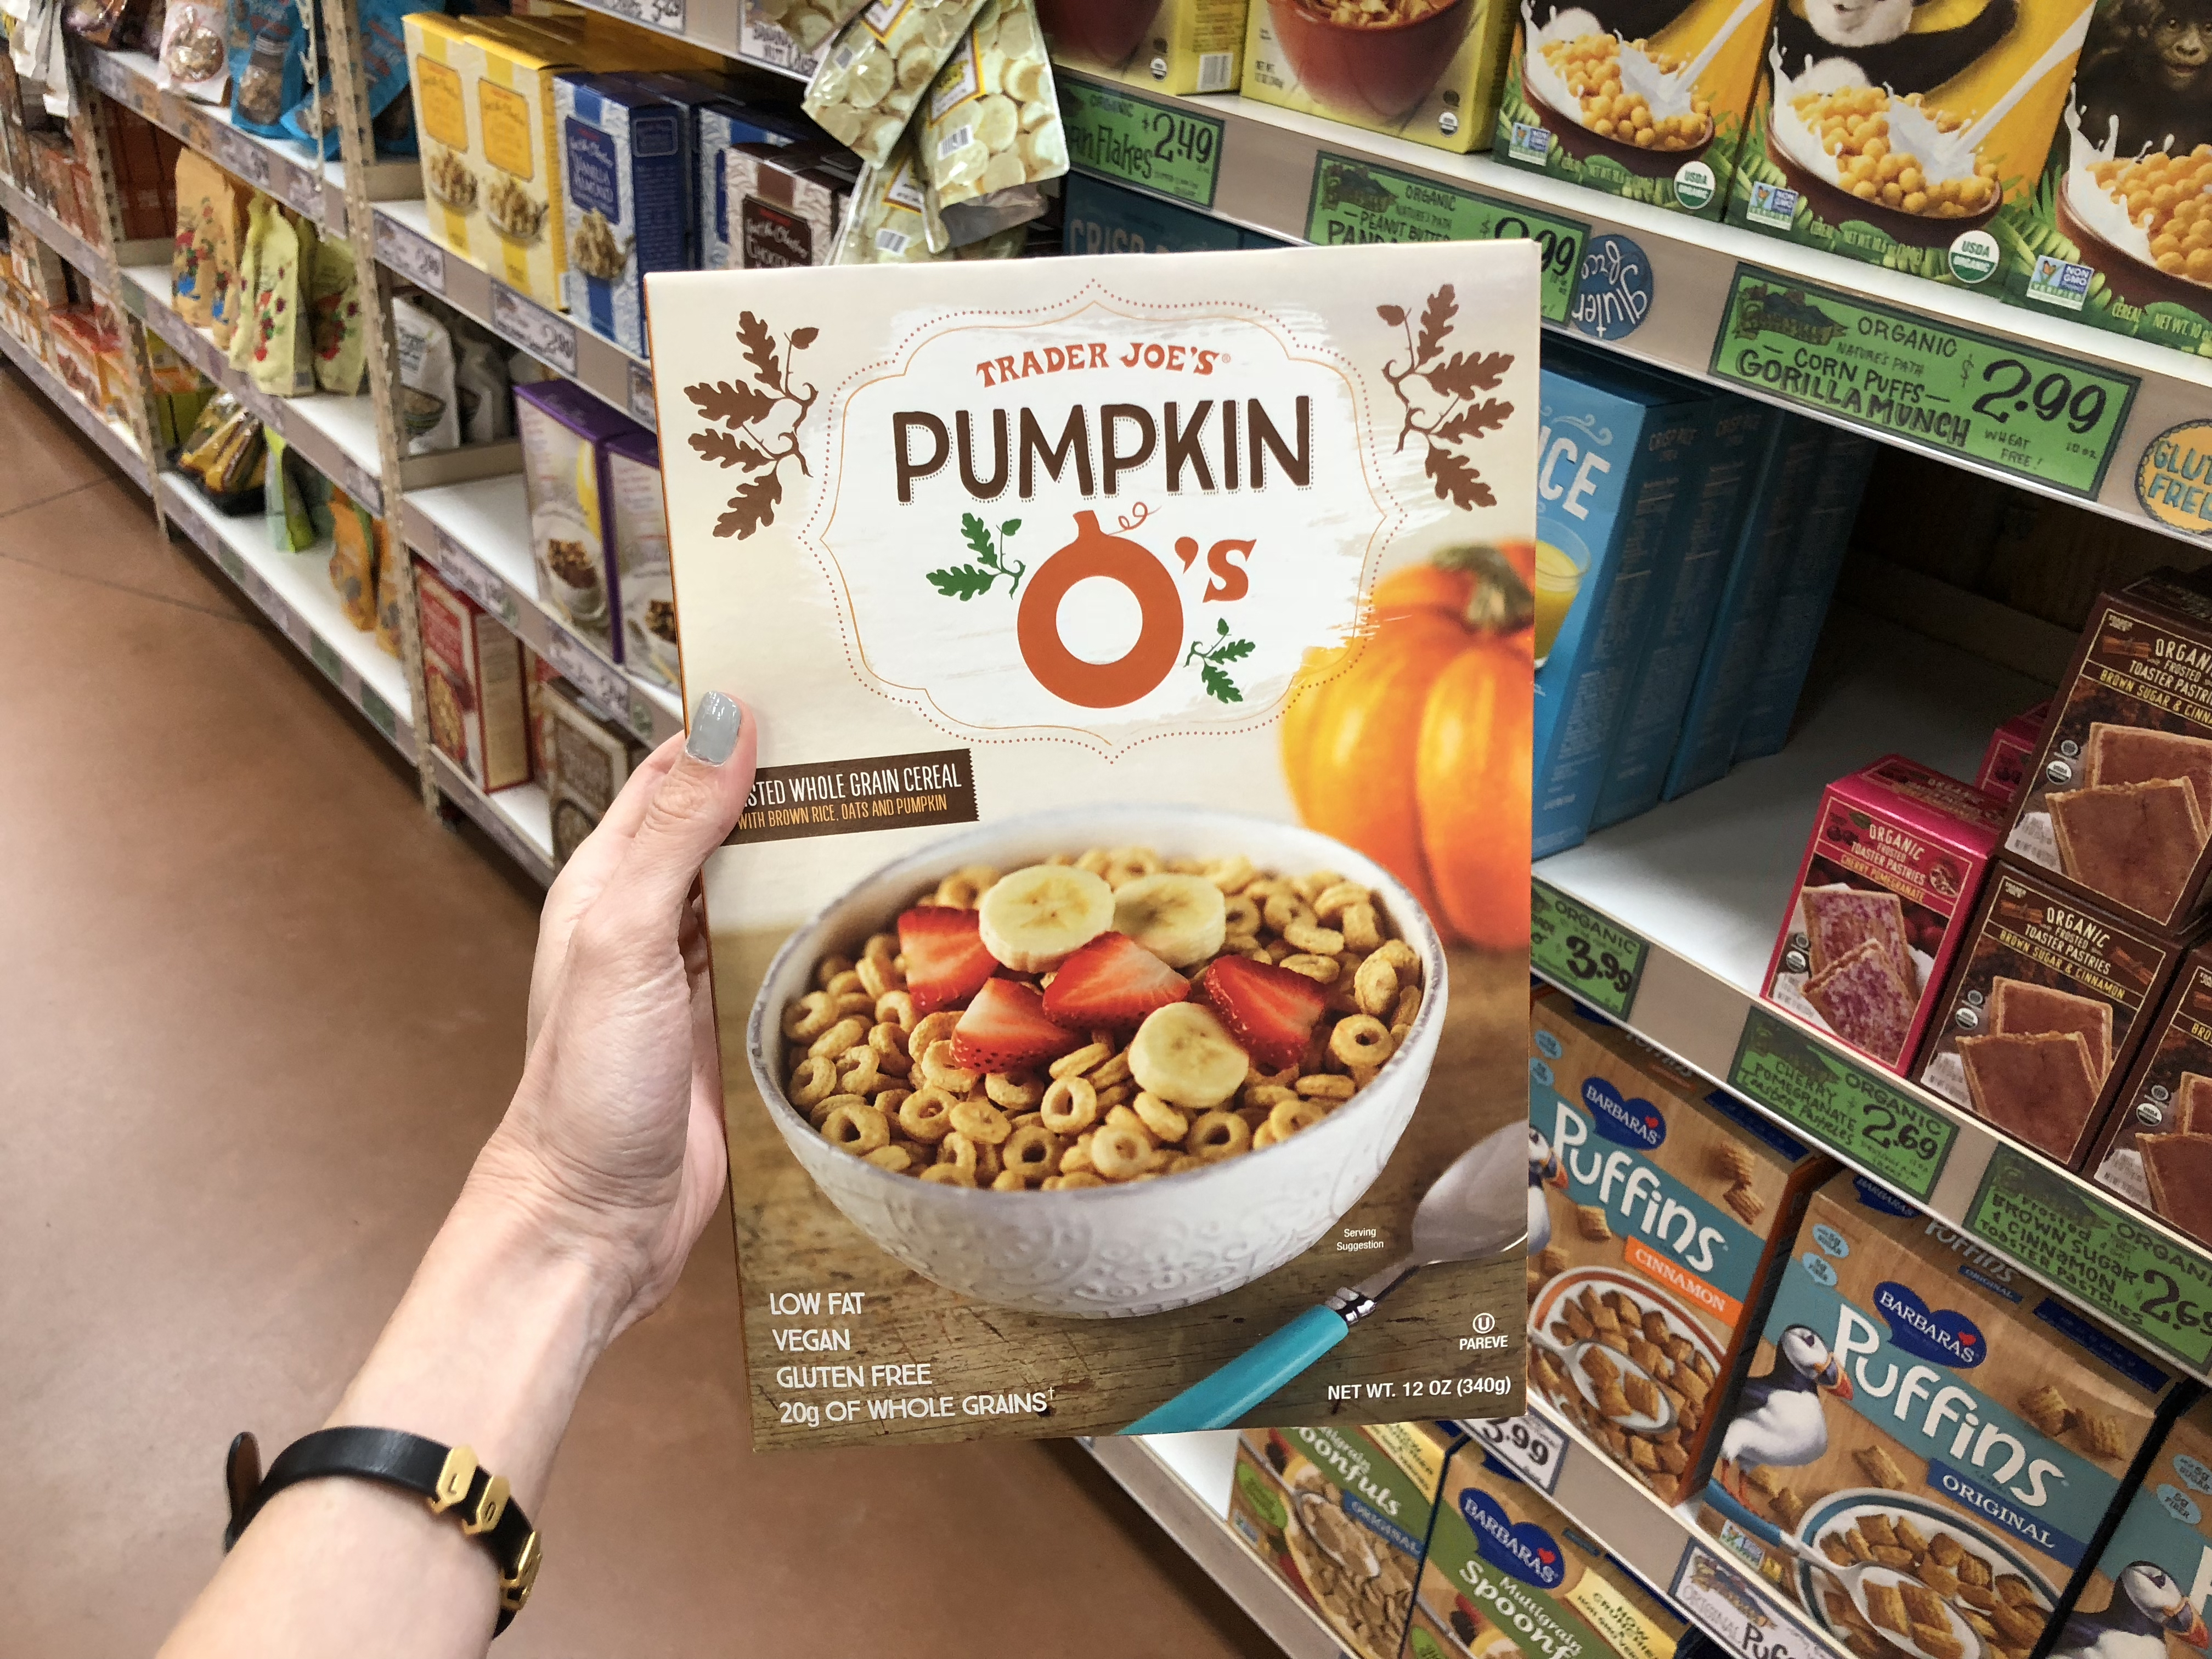 Deals on Trader Joe's Pumpkin items – Pumpkin O's Cereal at Trader Joe's